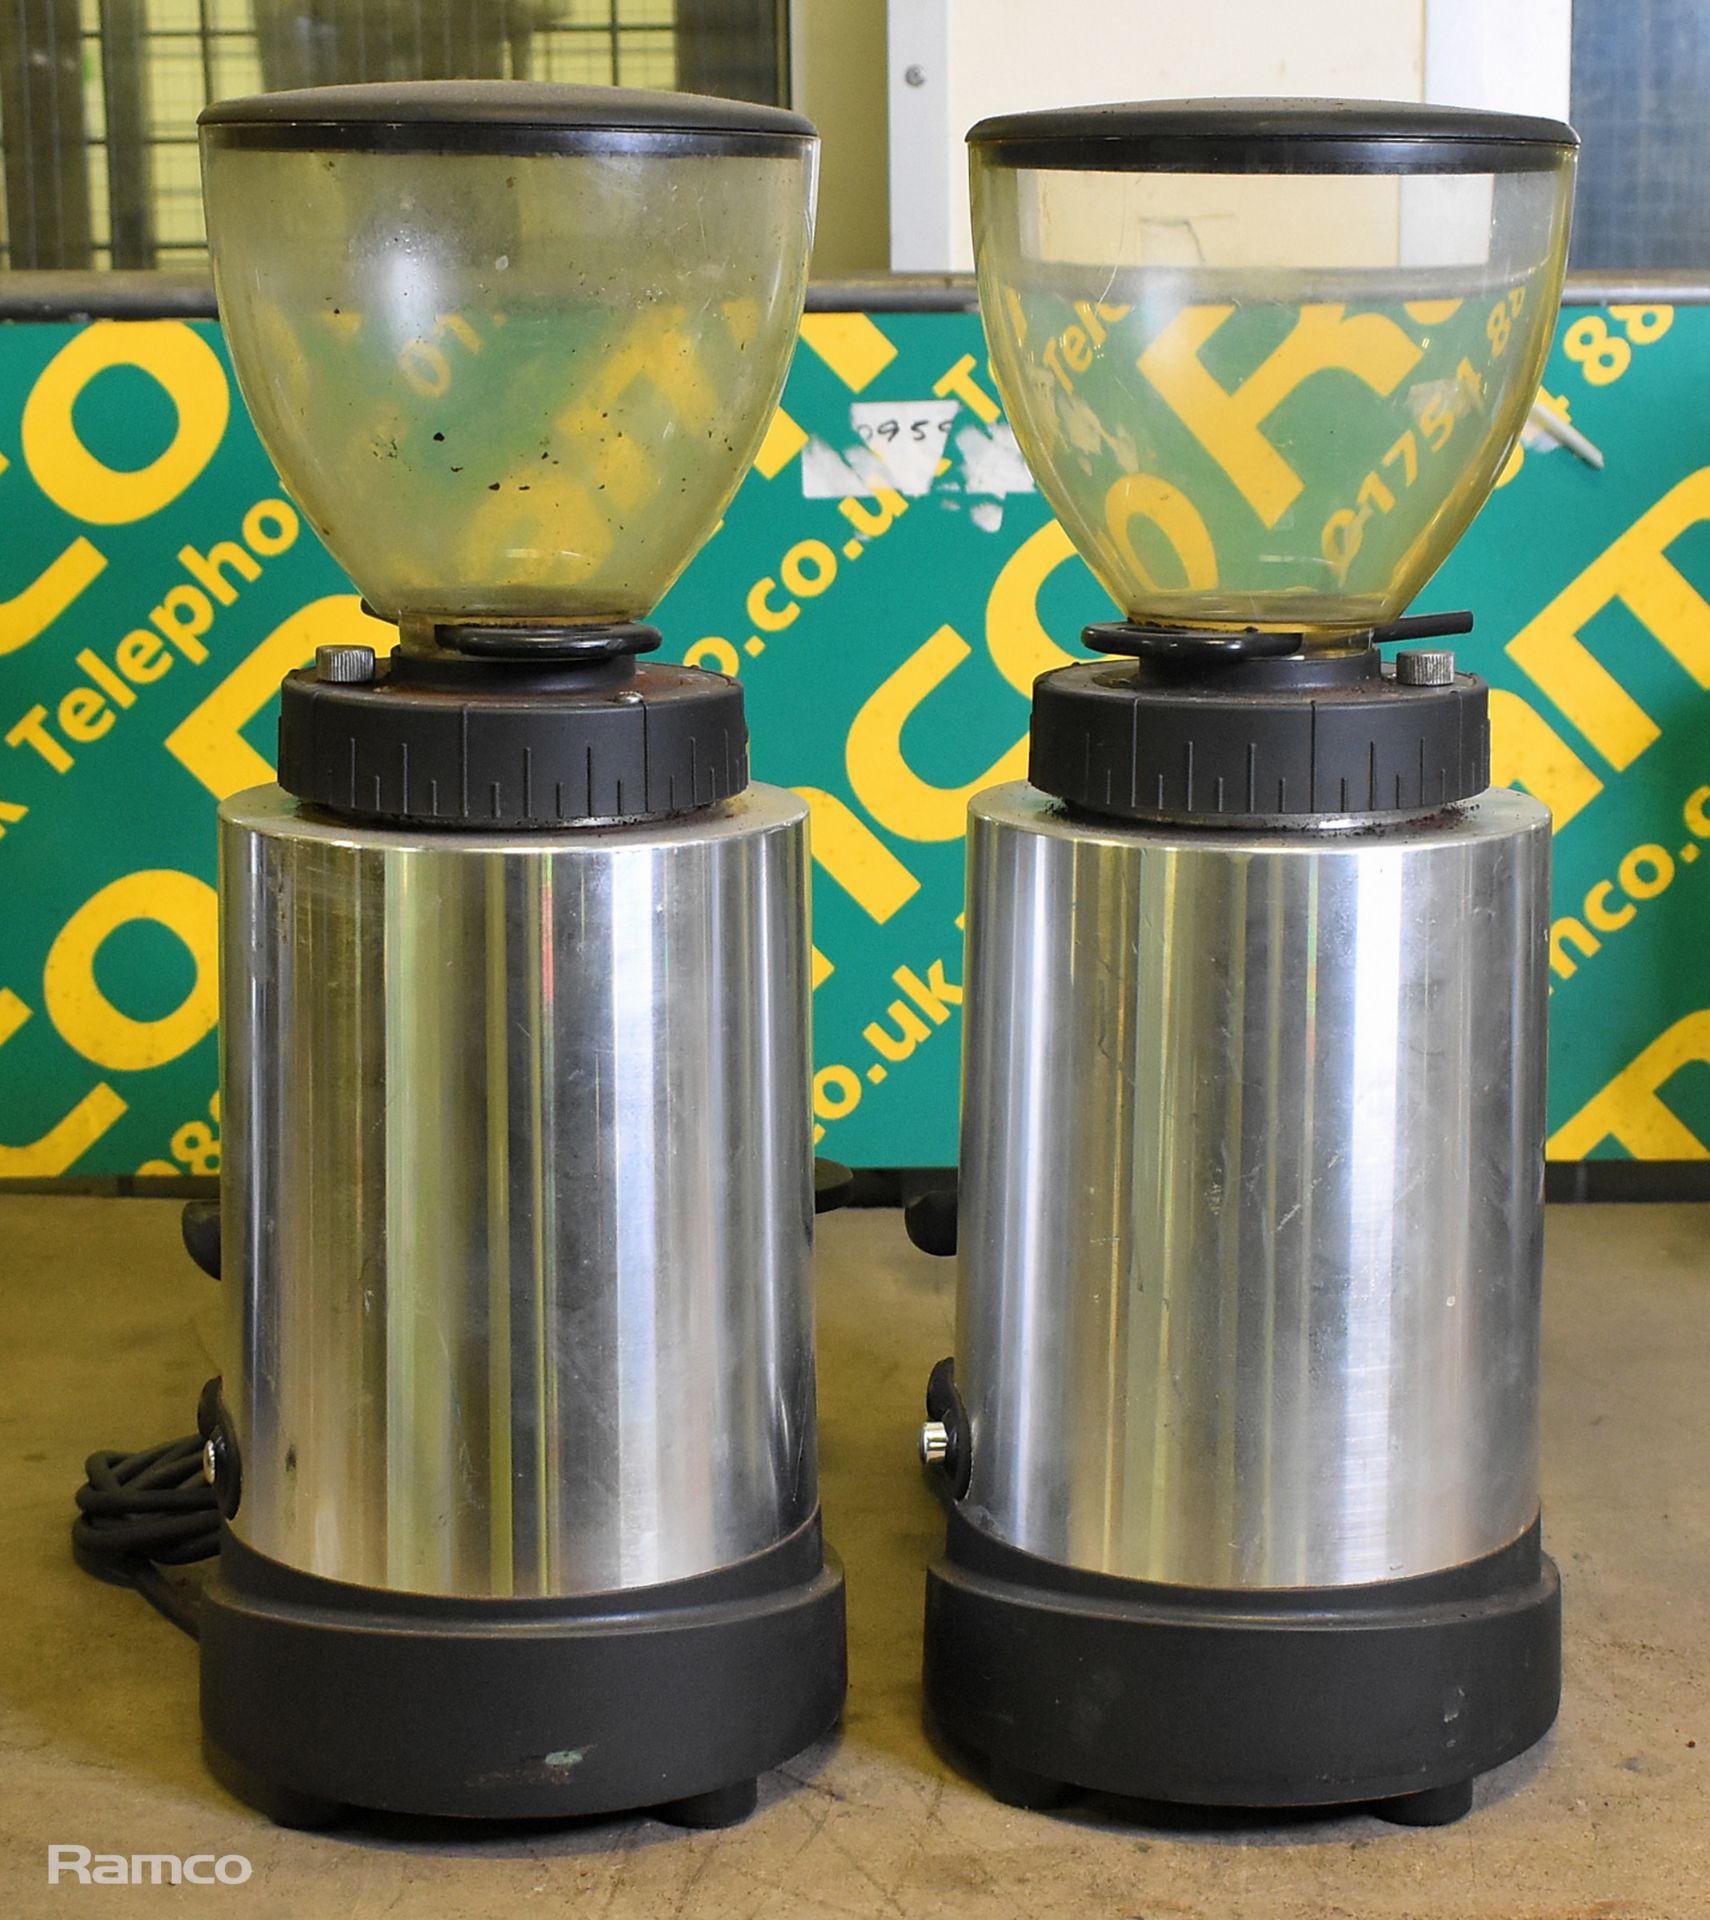 2x Ceado E6X espresso coffee grinders - Image 3 of 6